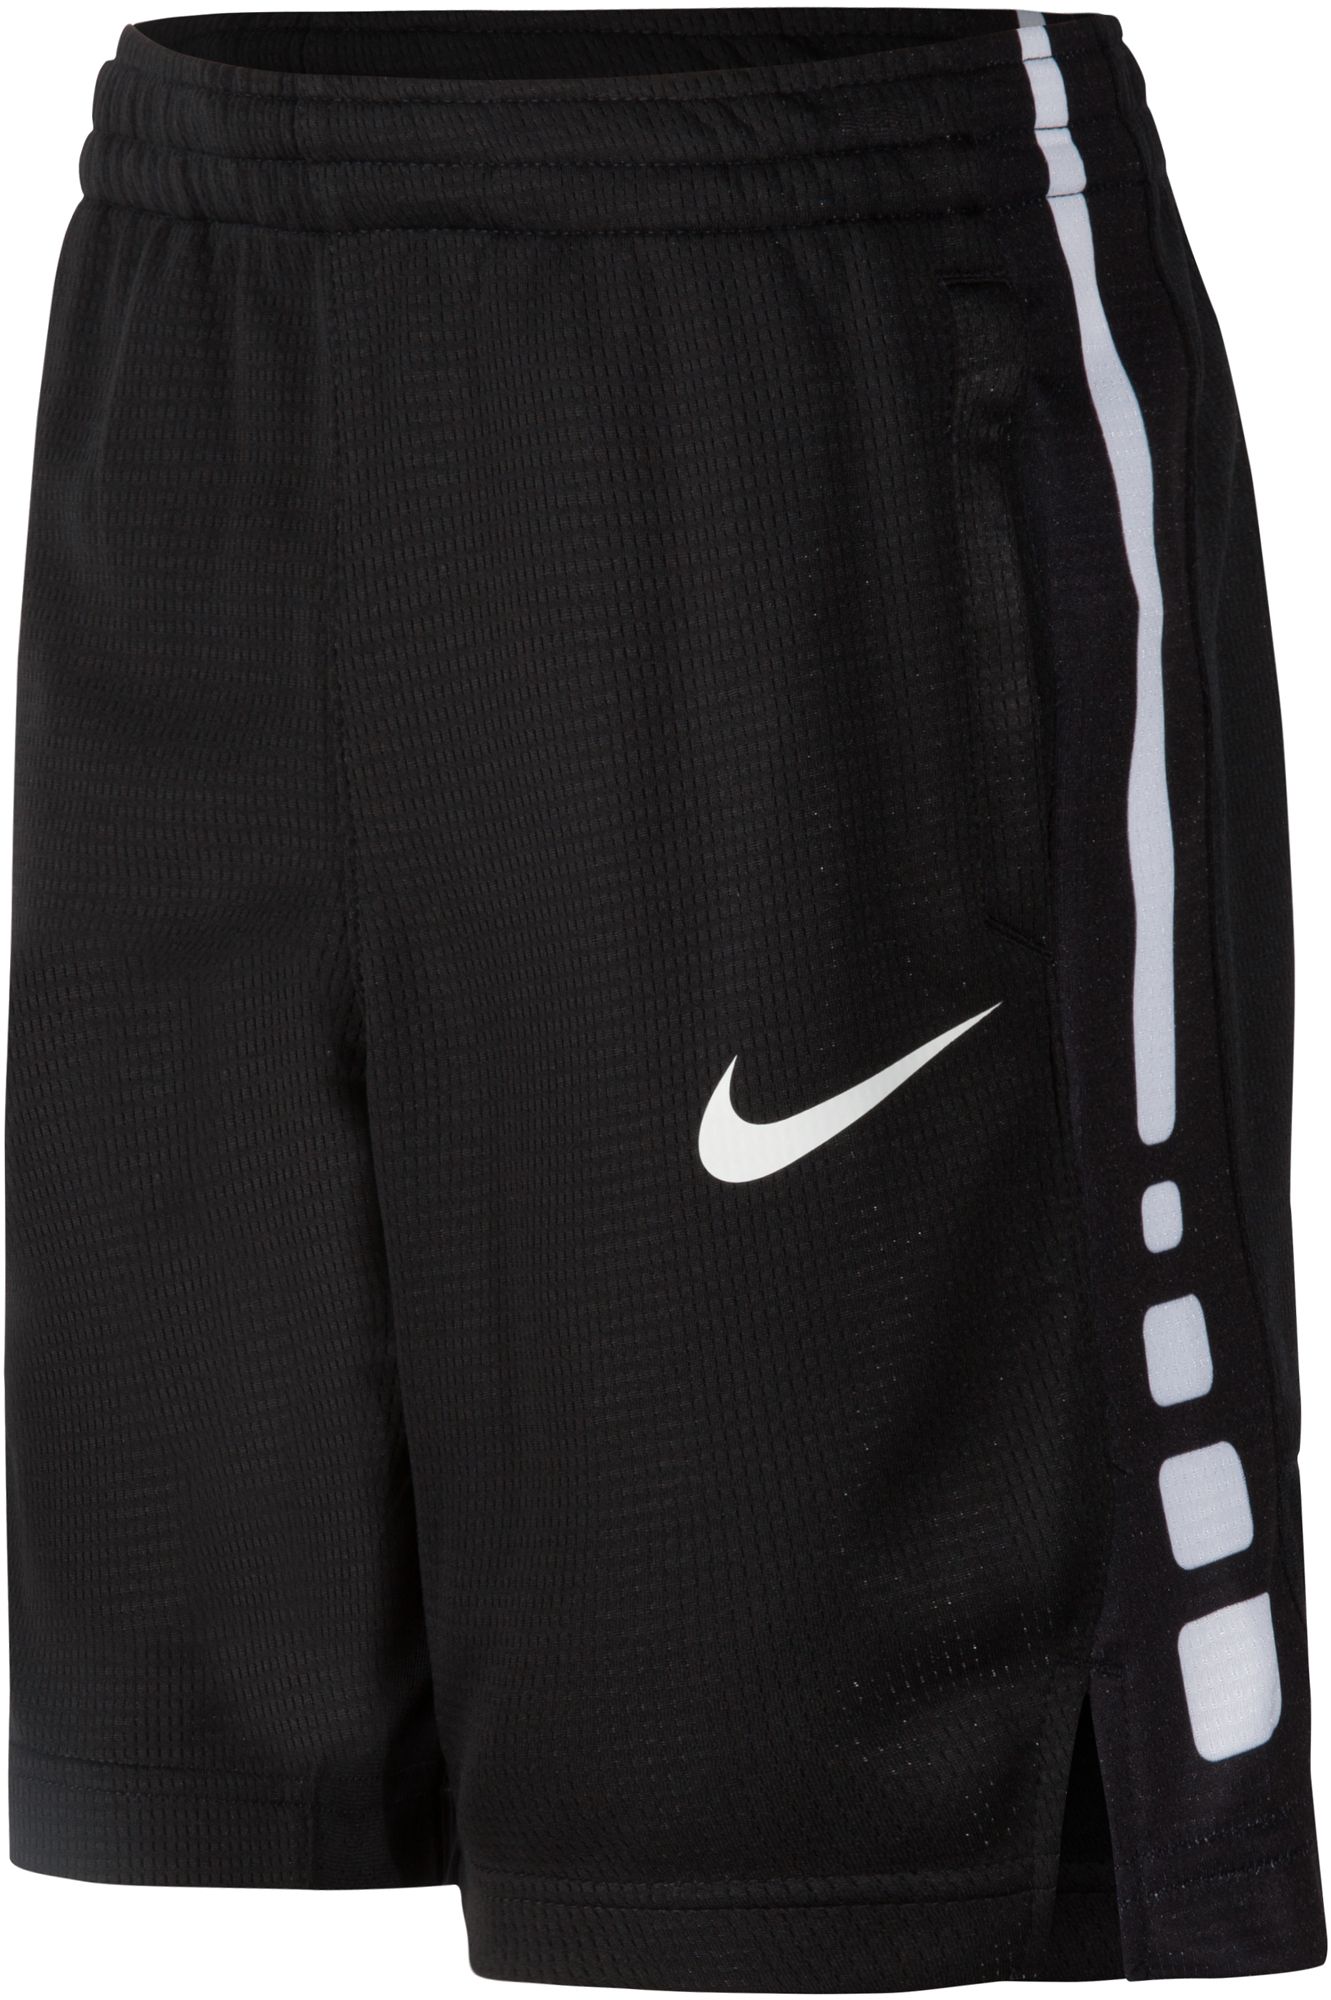 black and white nike elite shorts